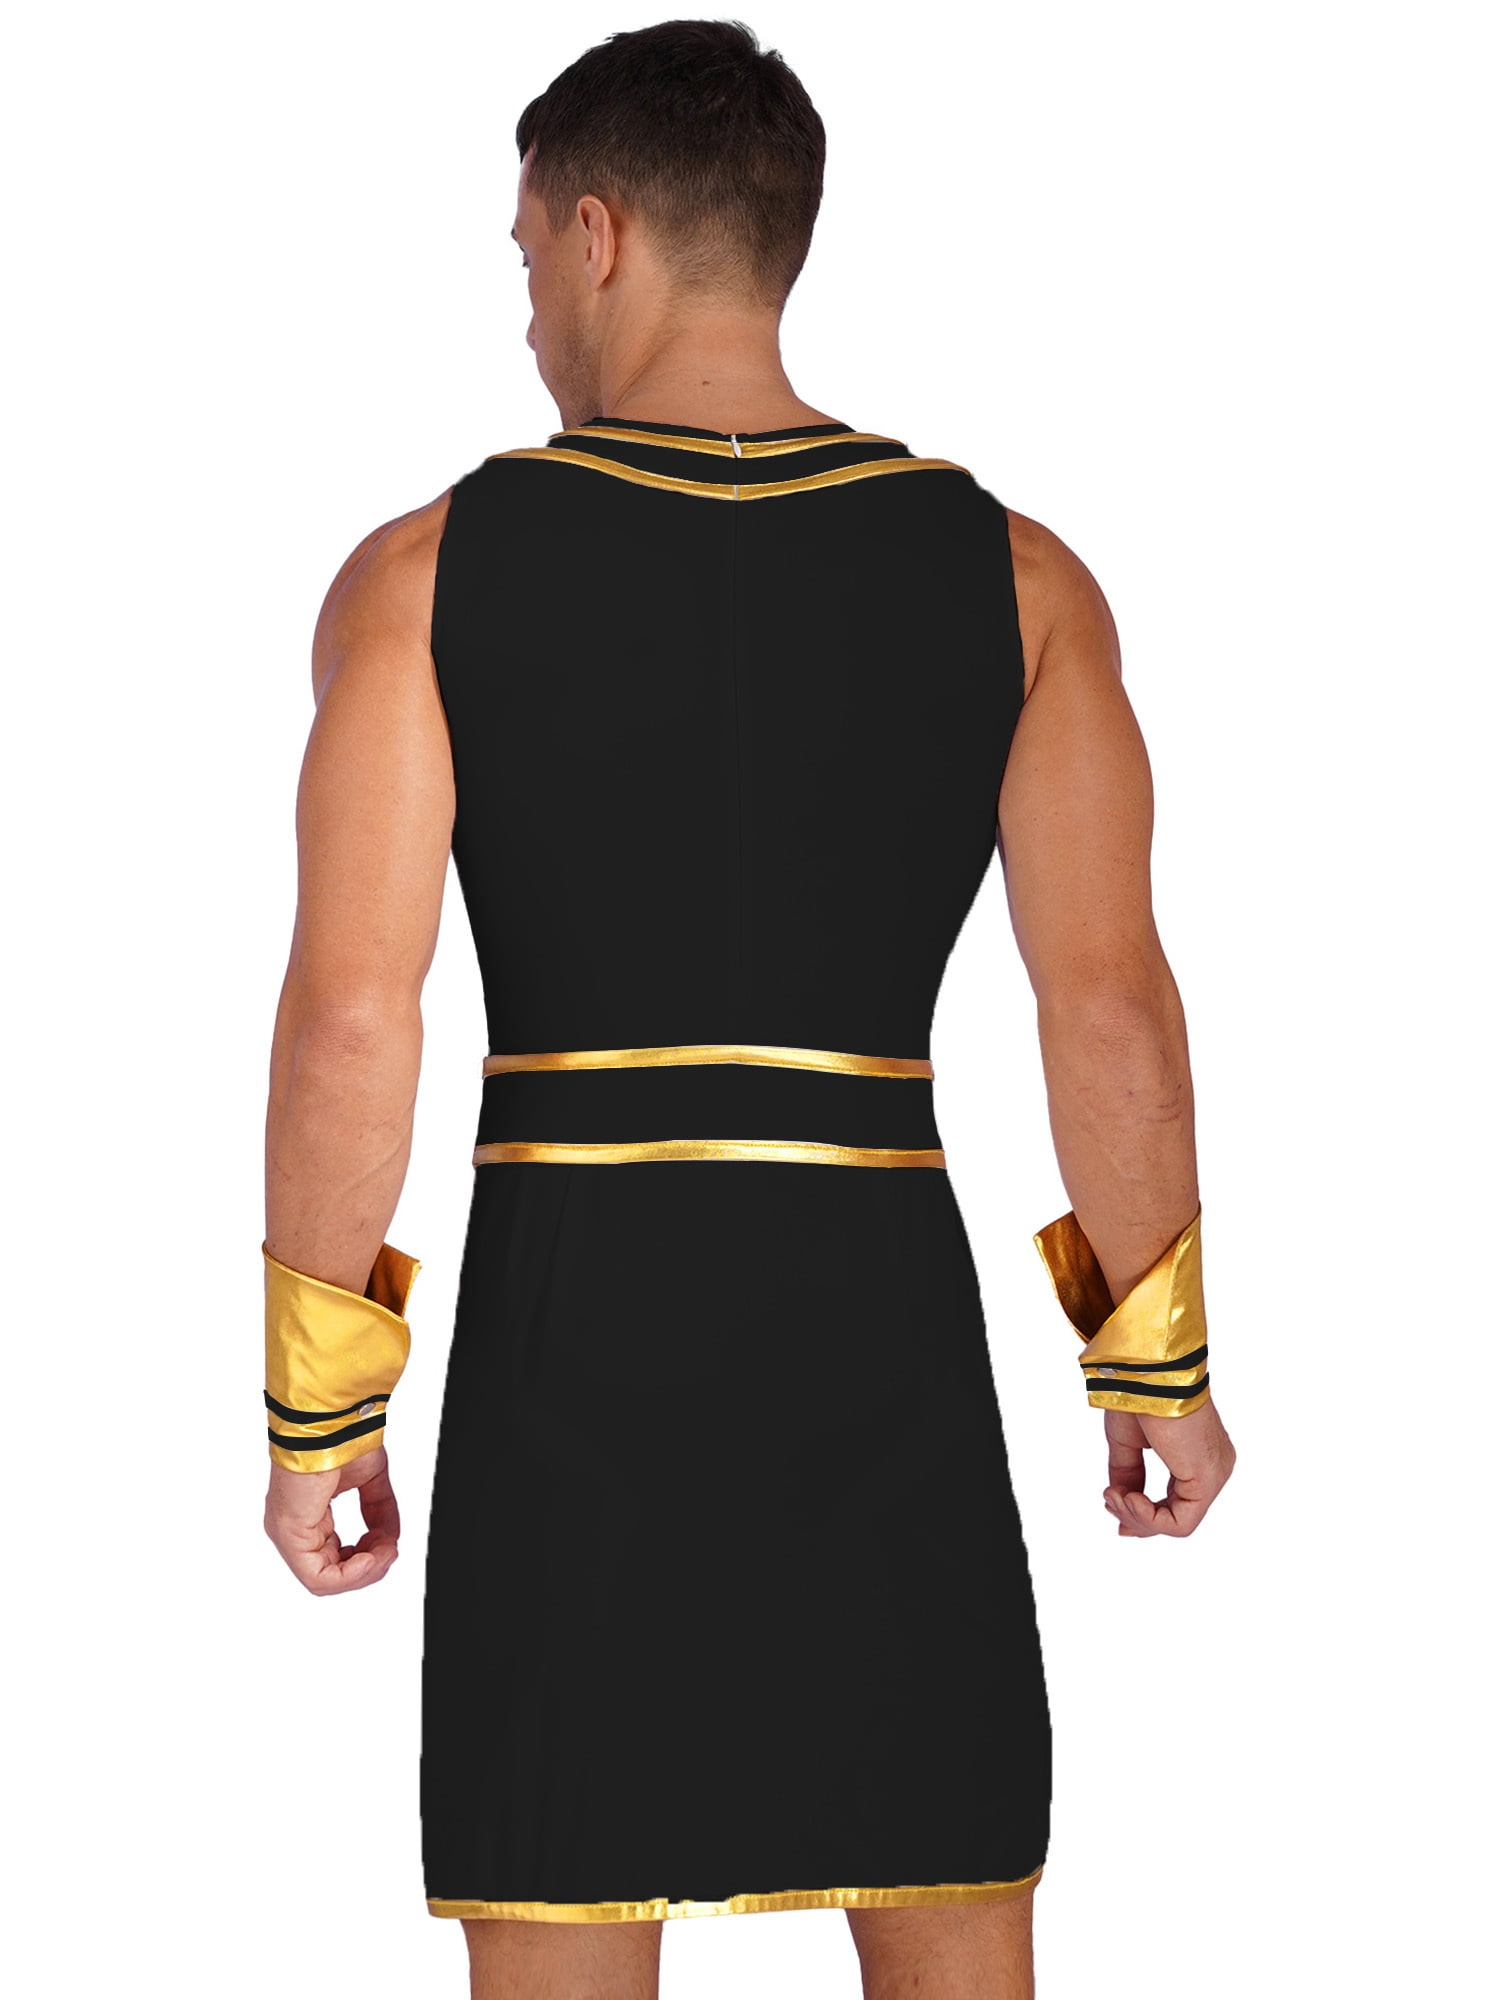 inhzoy Mens 3PCs Mens Ancient Egypt Greek Gladiator Warrior Cosplay Outfits  Black M